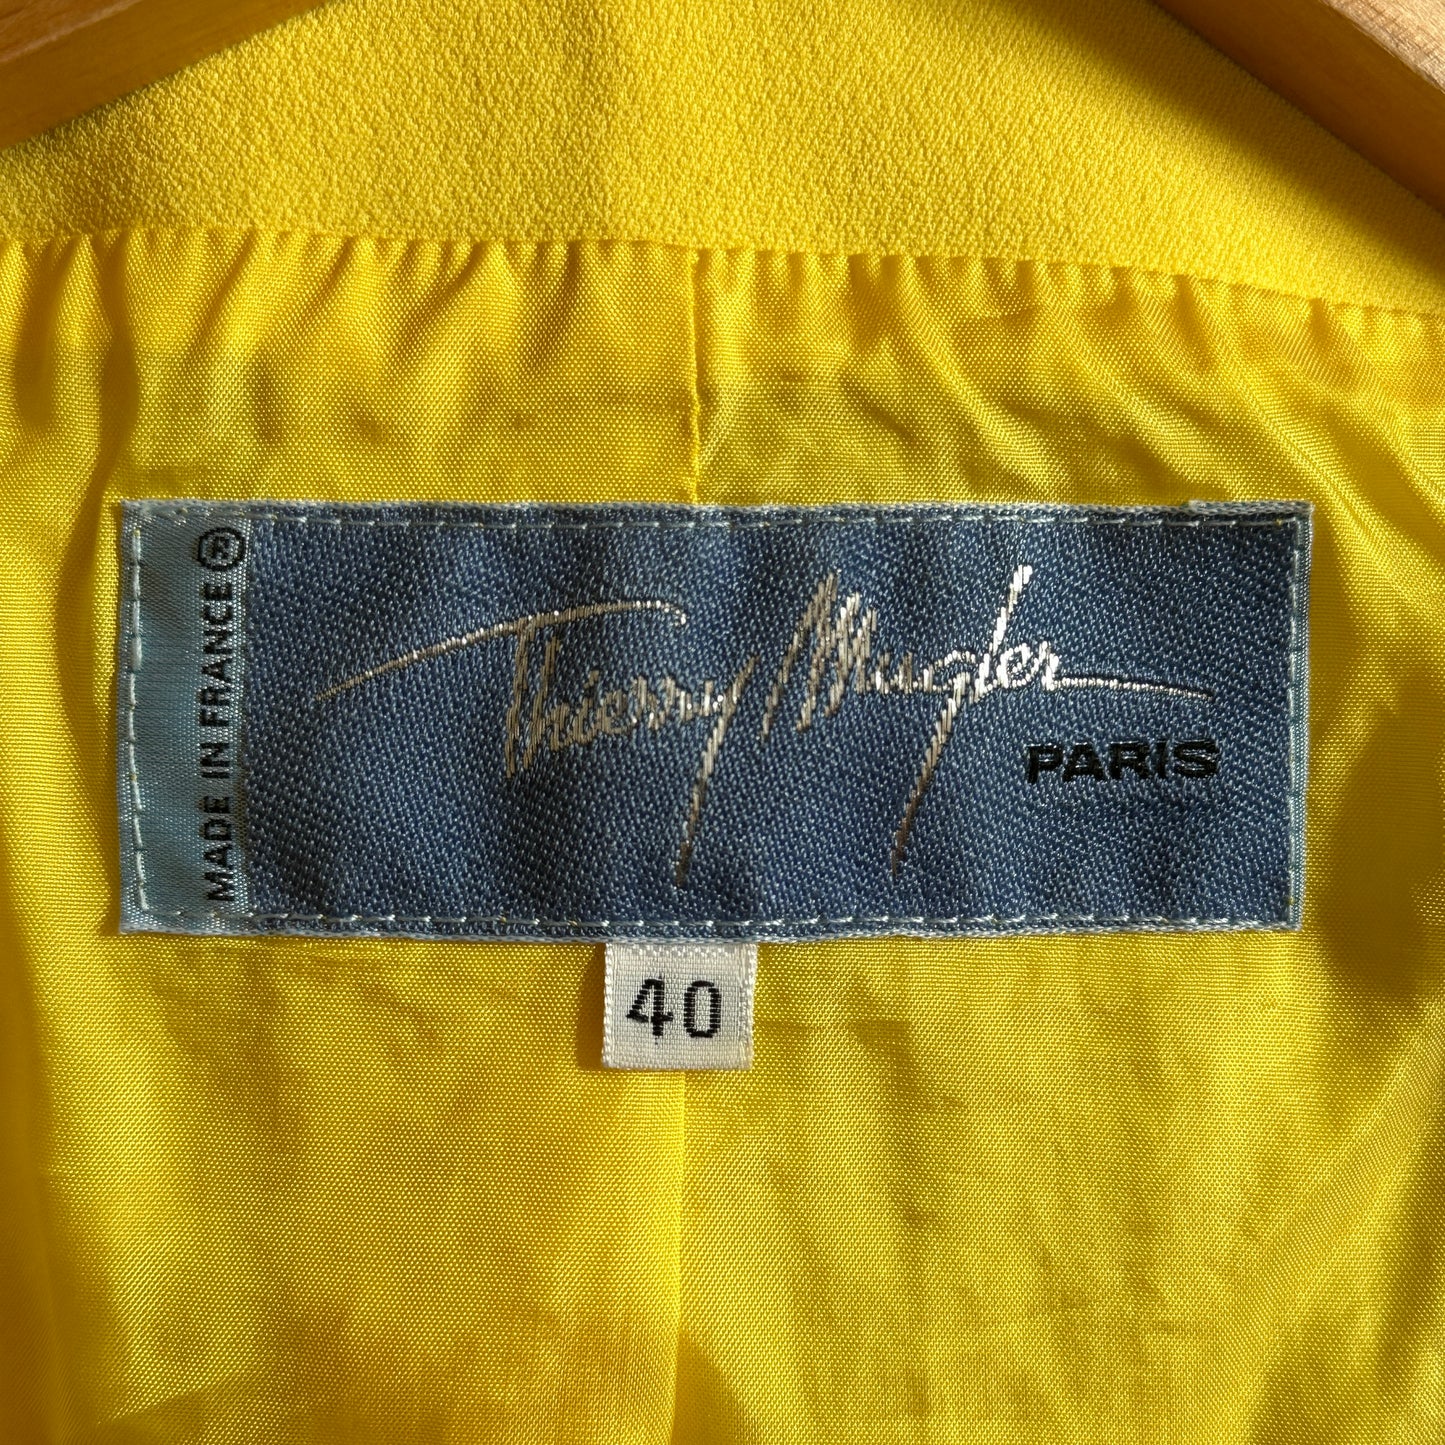 Thierry Mugler Yellow Jacket & Skirt Suit